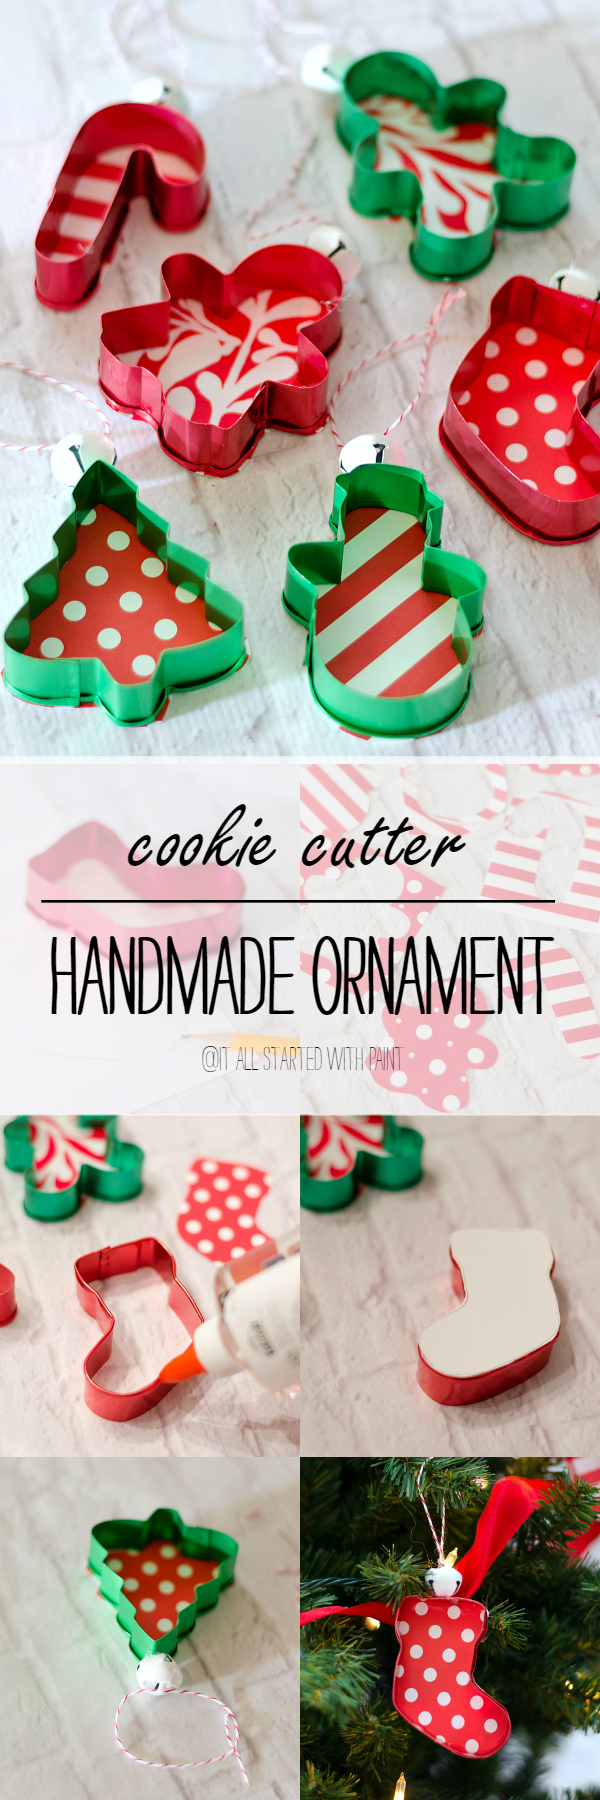 Handmade-Ornament-Cookie-Cutter-Ornament Ideas